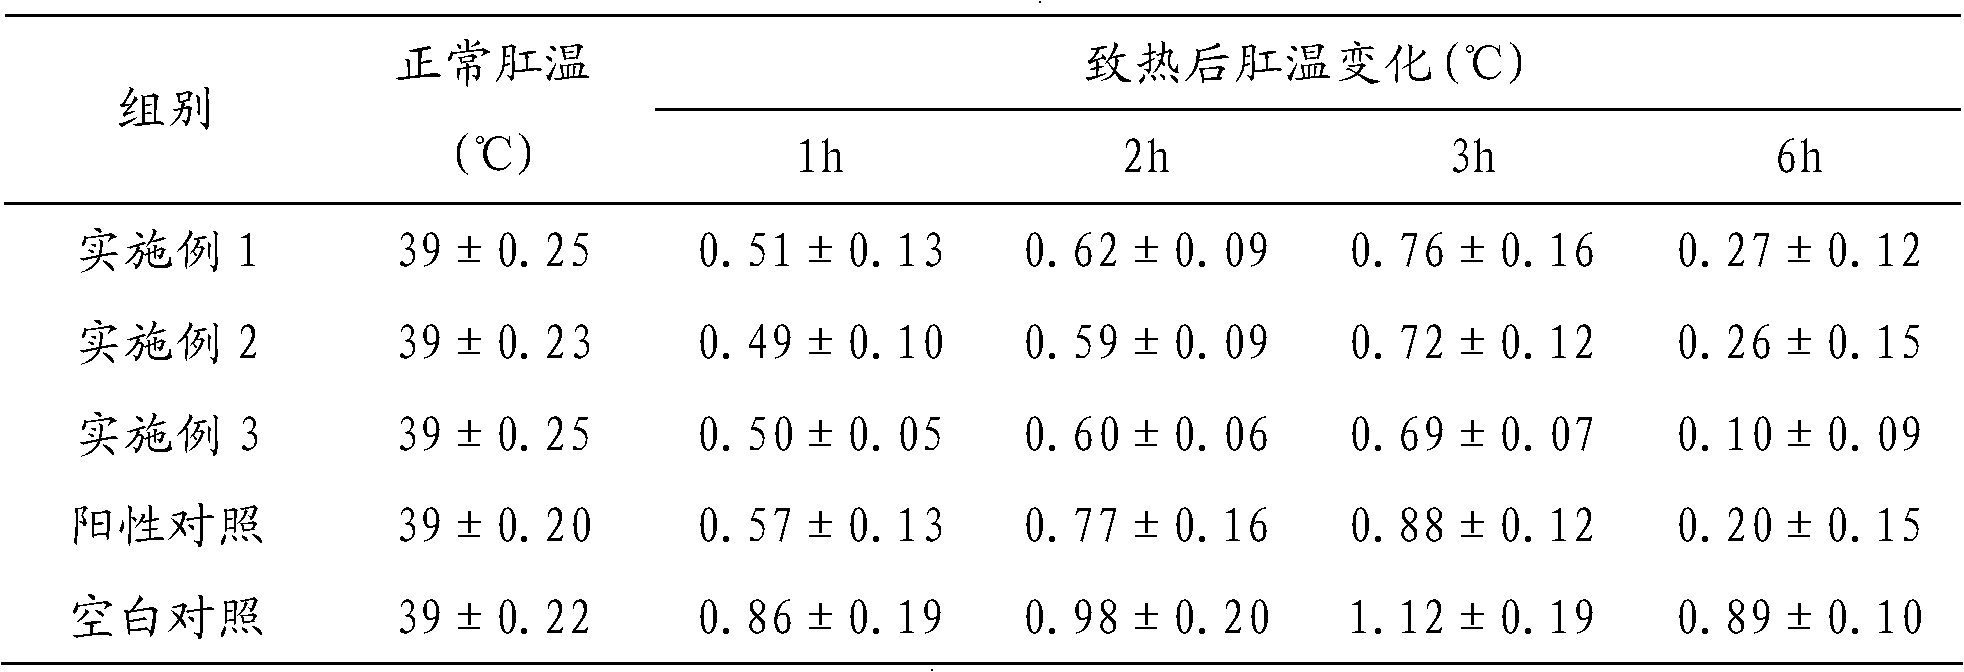 Chinese medicinal liquid preparation (formulation)